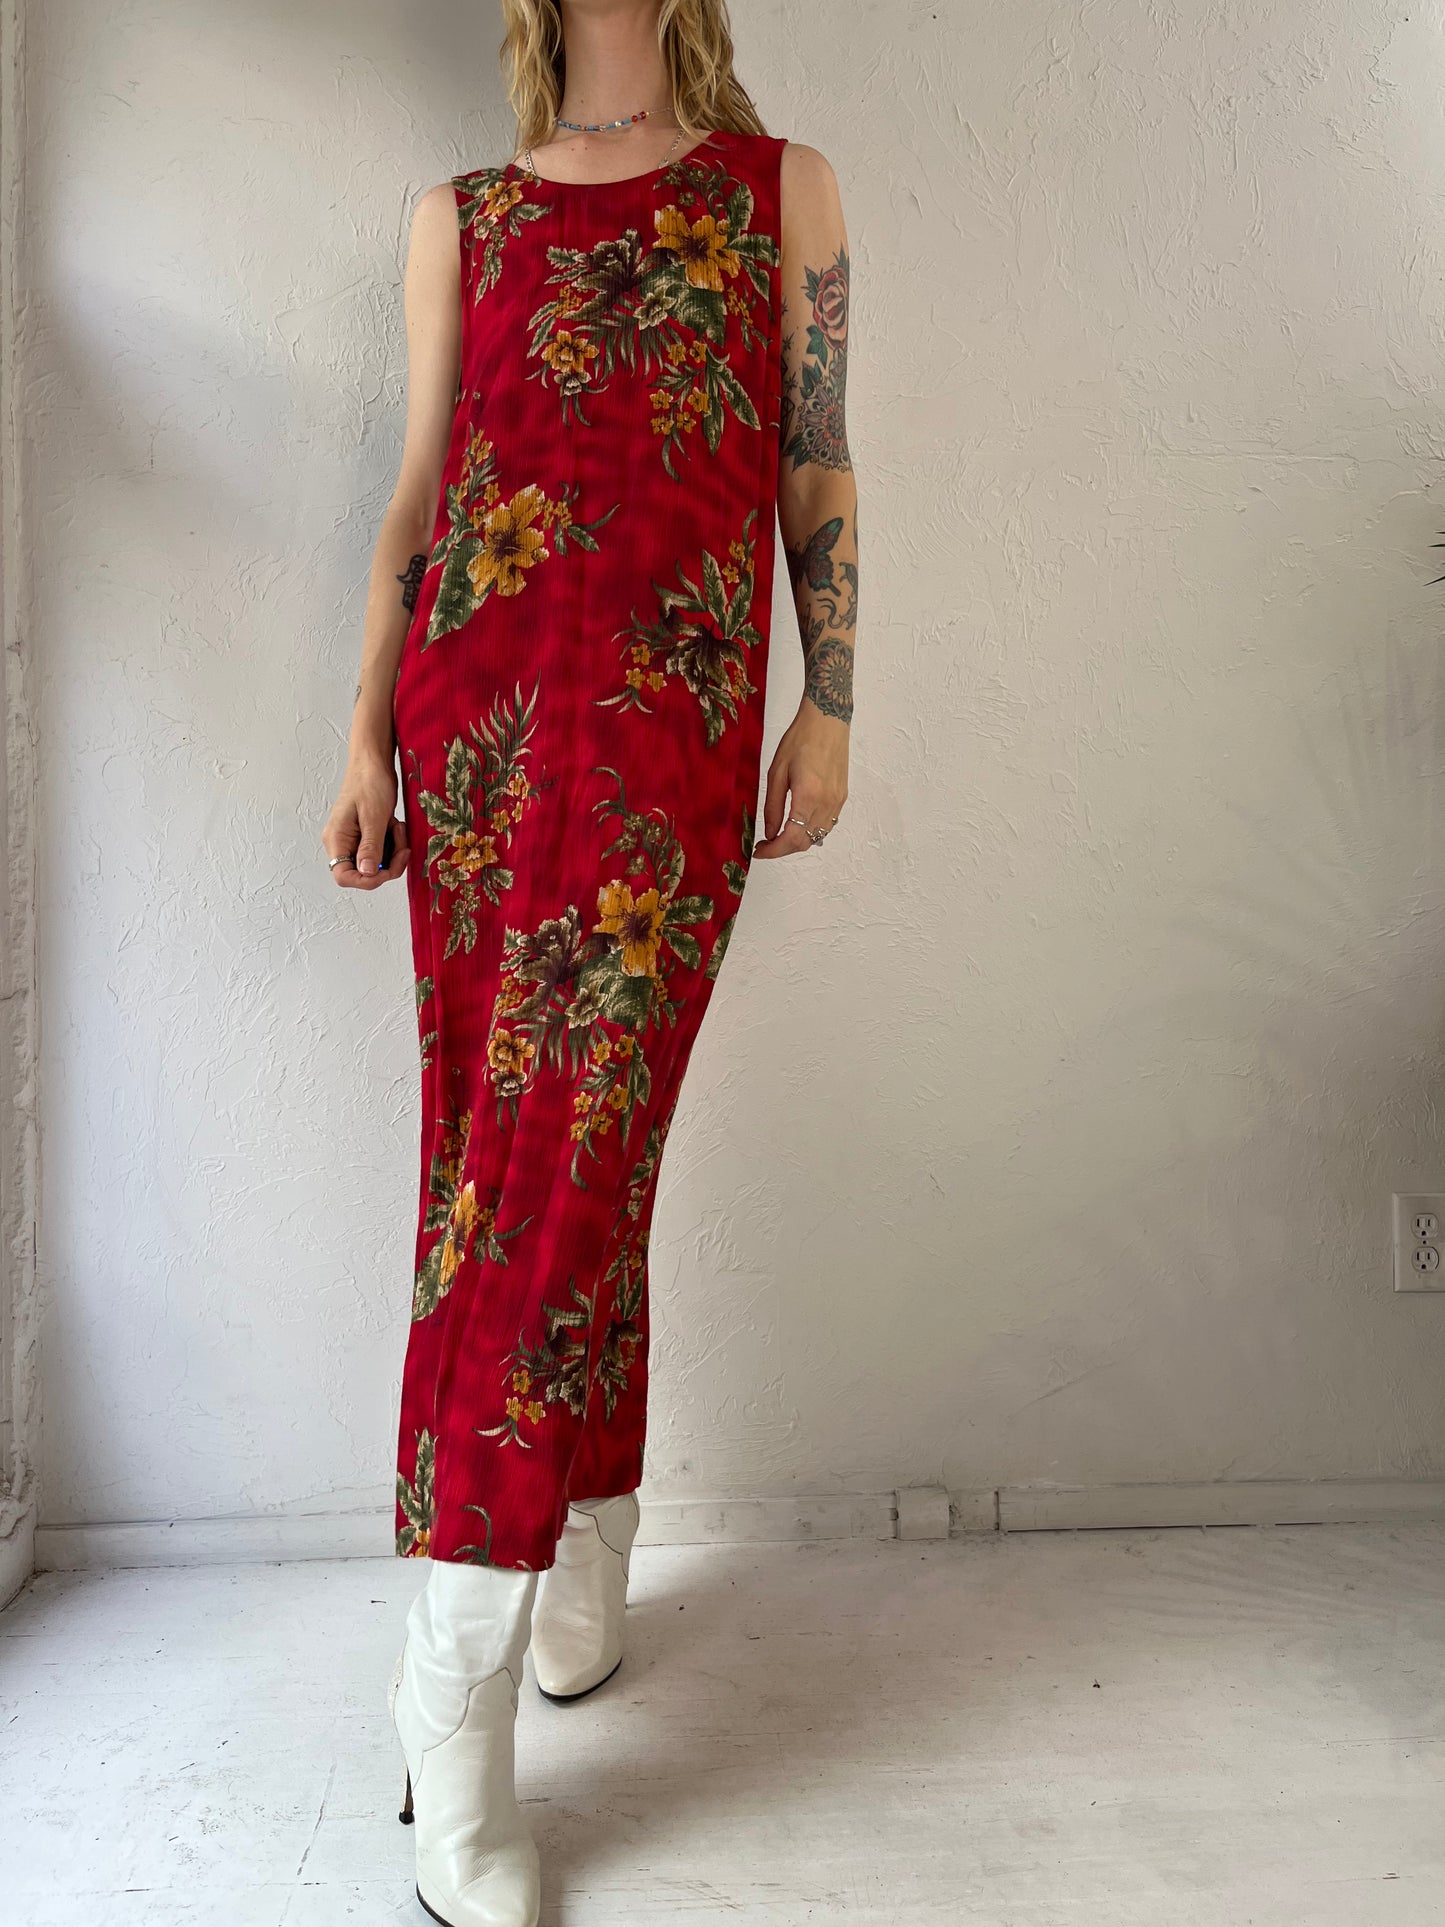 Y2k 'White Stag' Sleeveless Red Hawaiian Print Maxi Dress / Medium